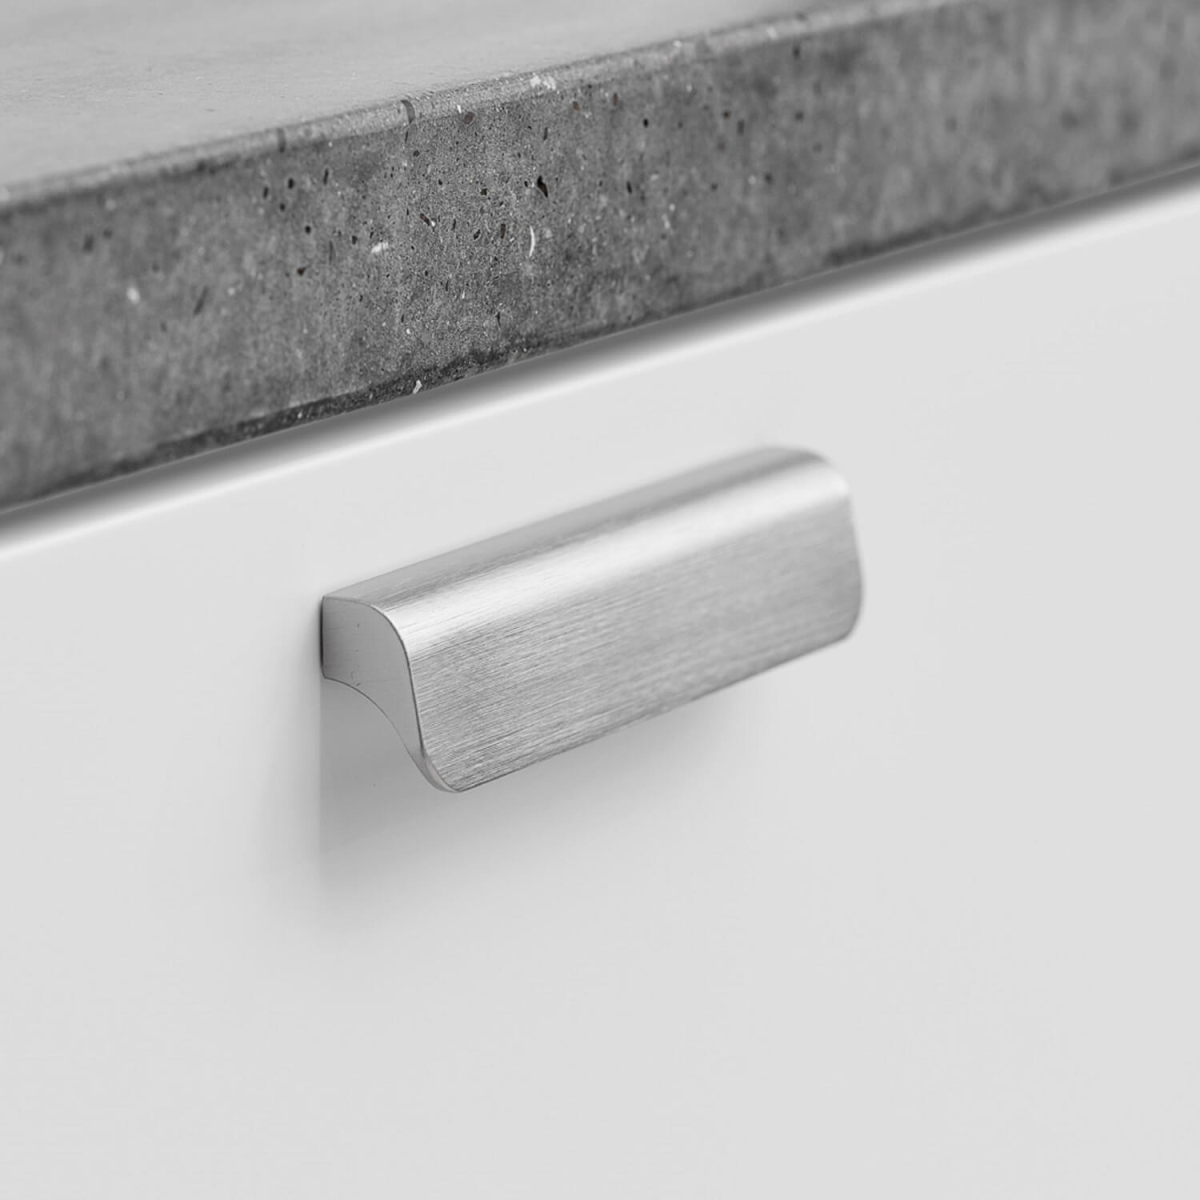 Furnipart Furniture handle - Brushed steel - Model FLAT - Cabinet